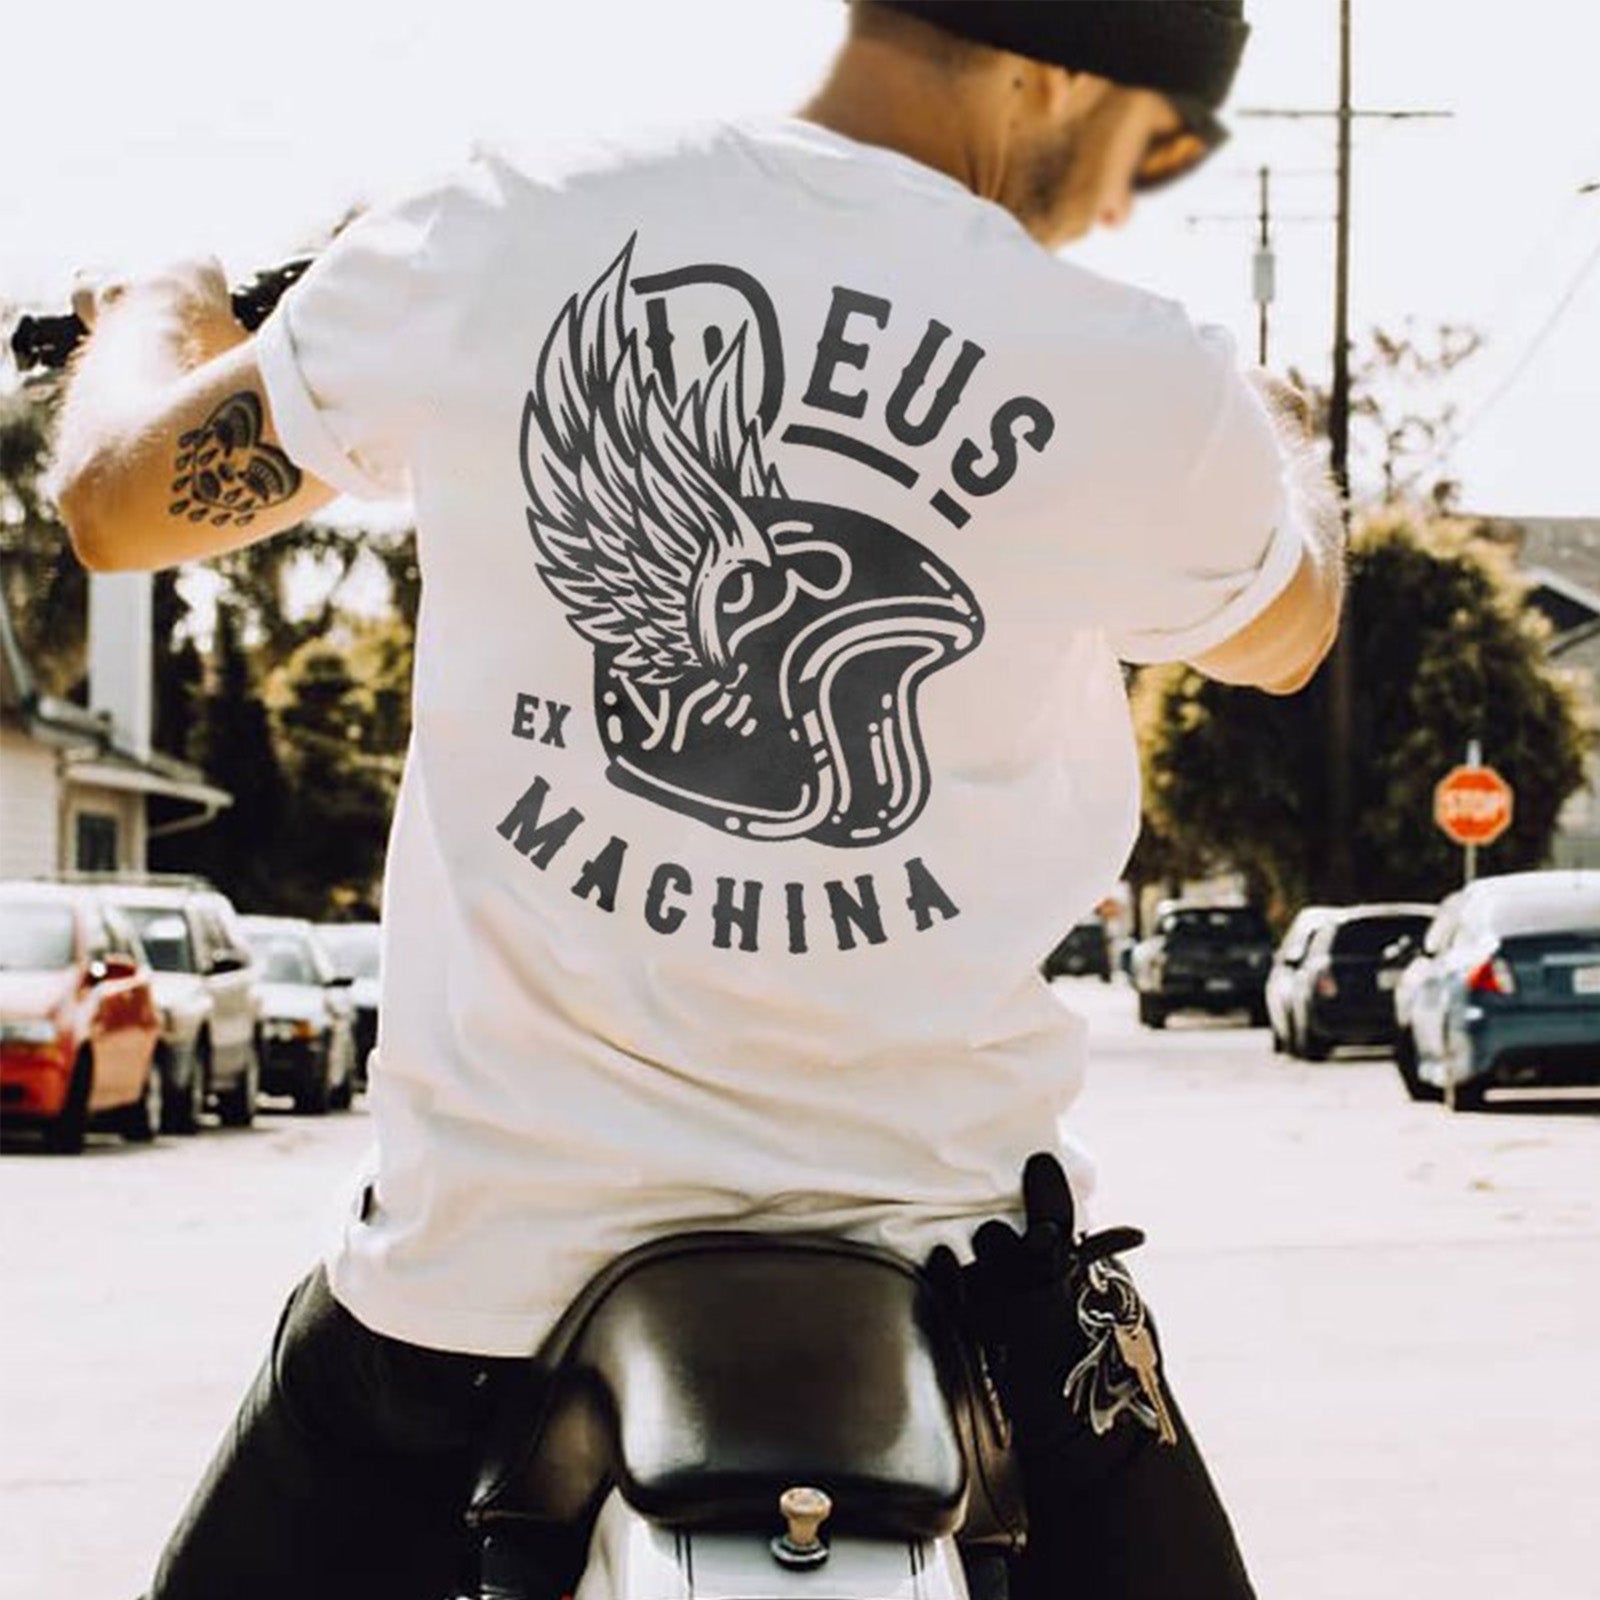 Uprandy Deus Ex Machina Printed Designer T-Shirt - chicyea